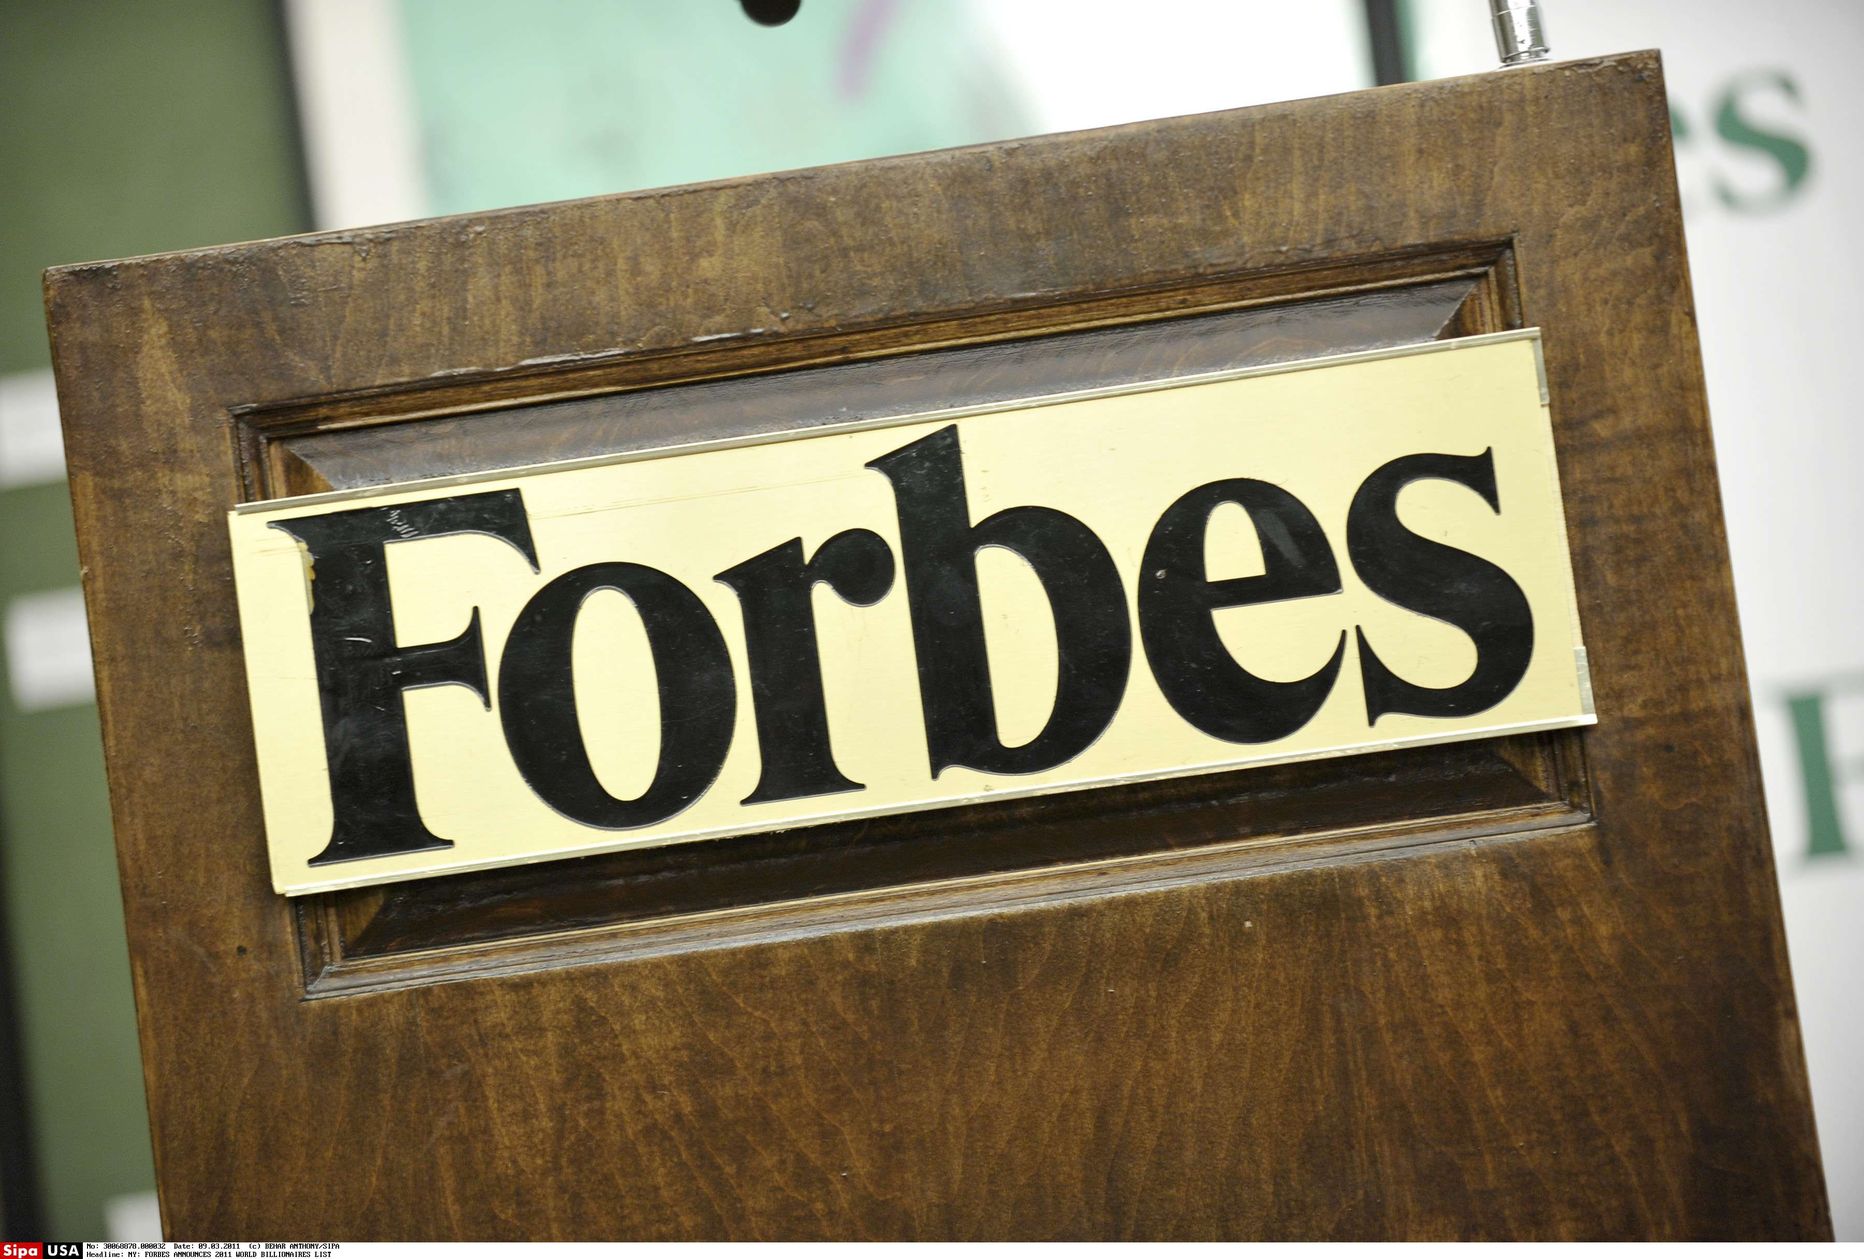 Izdevuma "Forbes" logo.